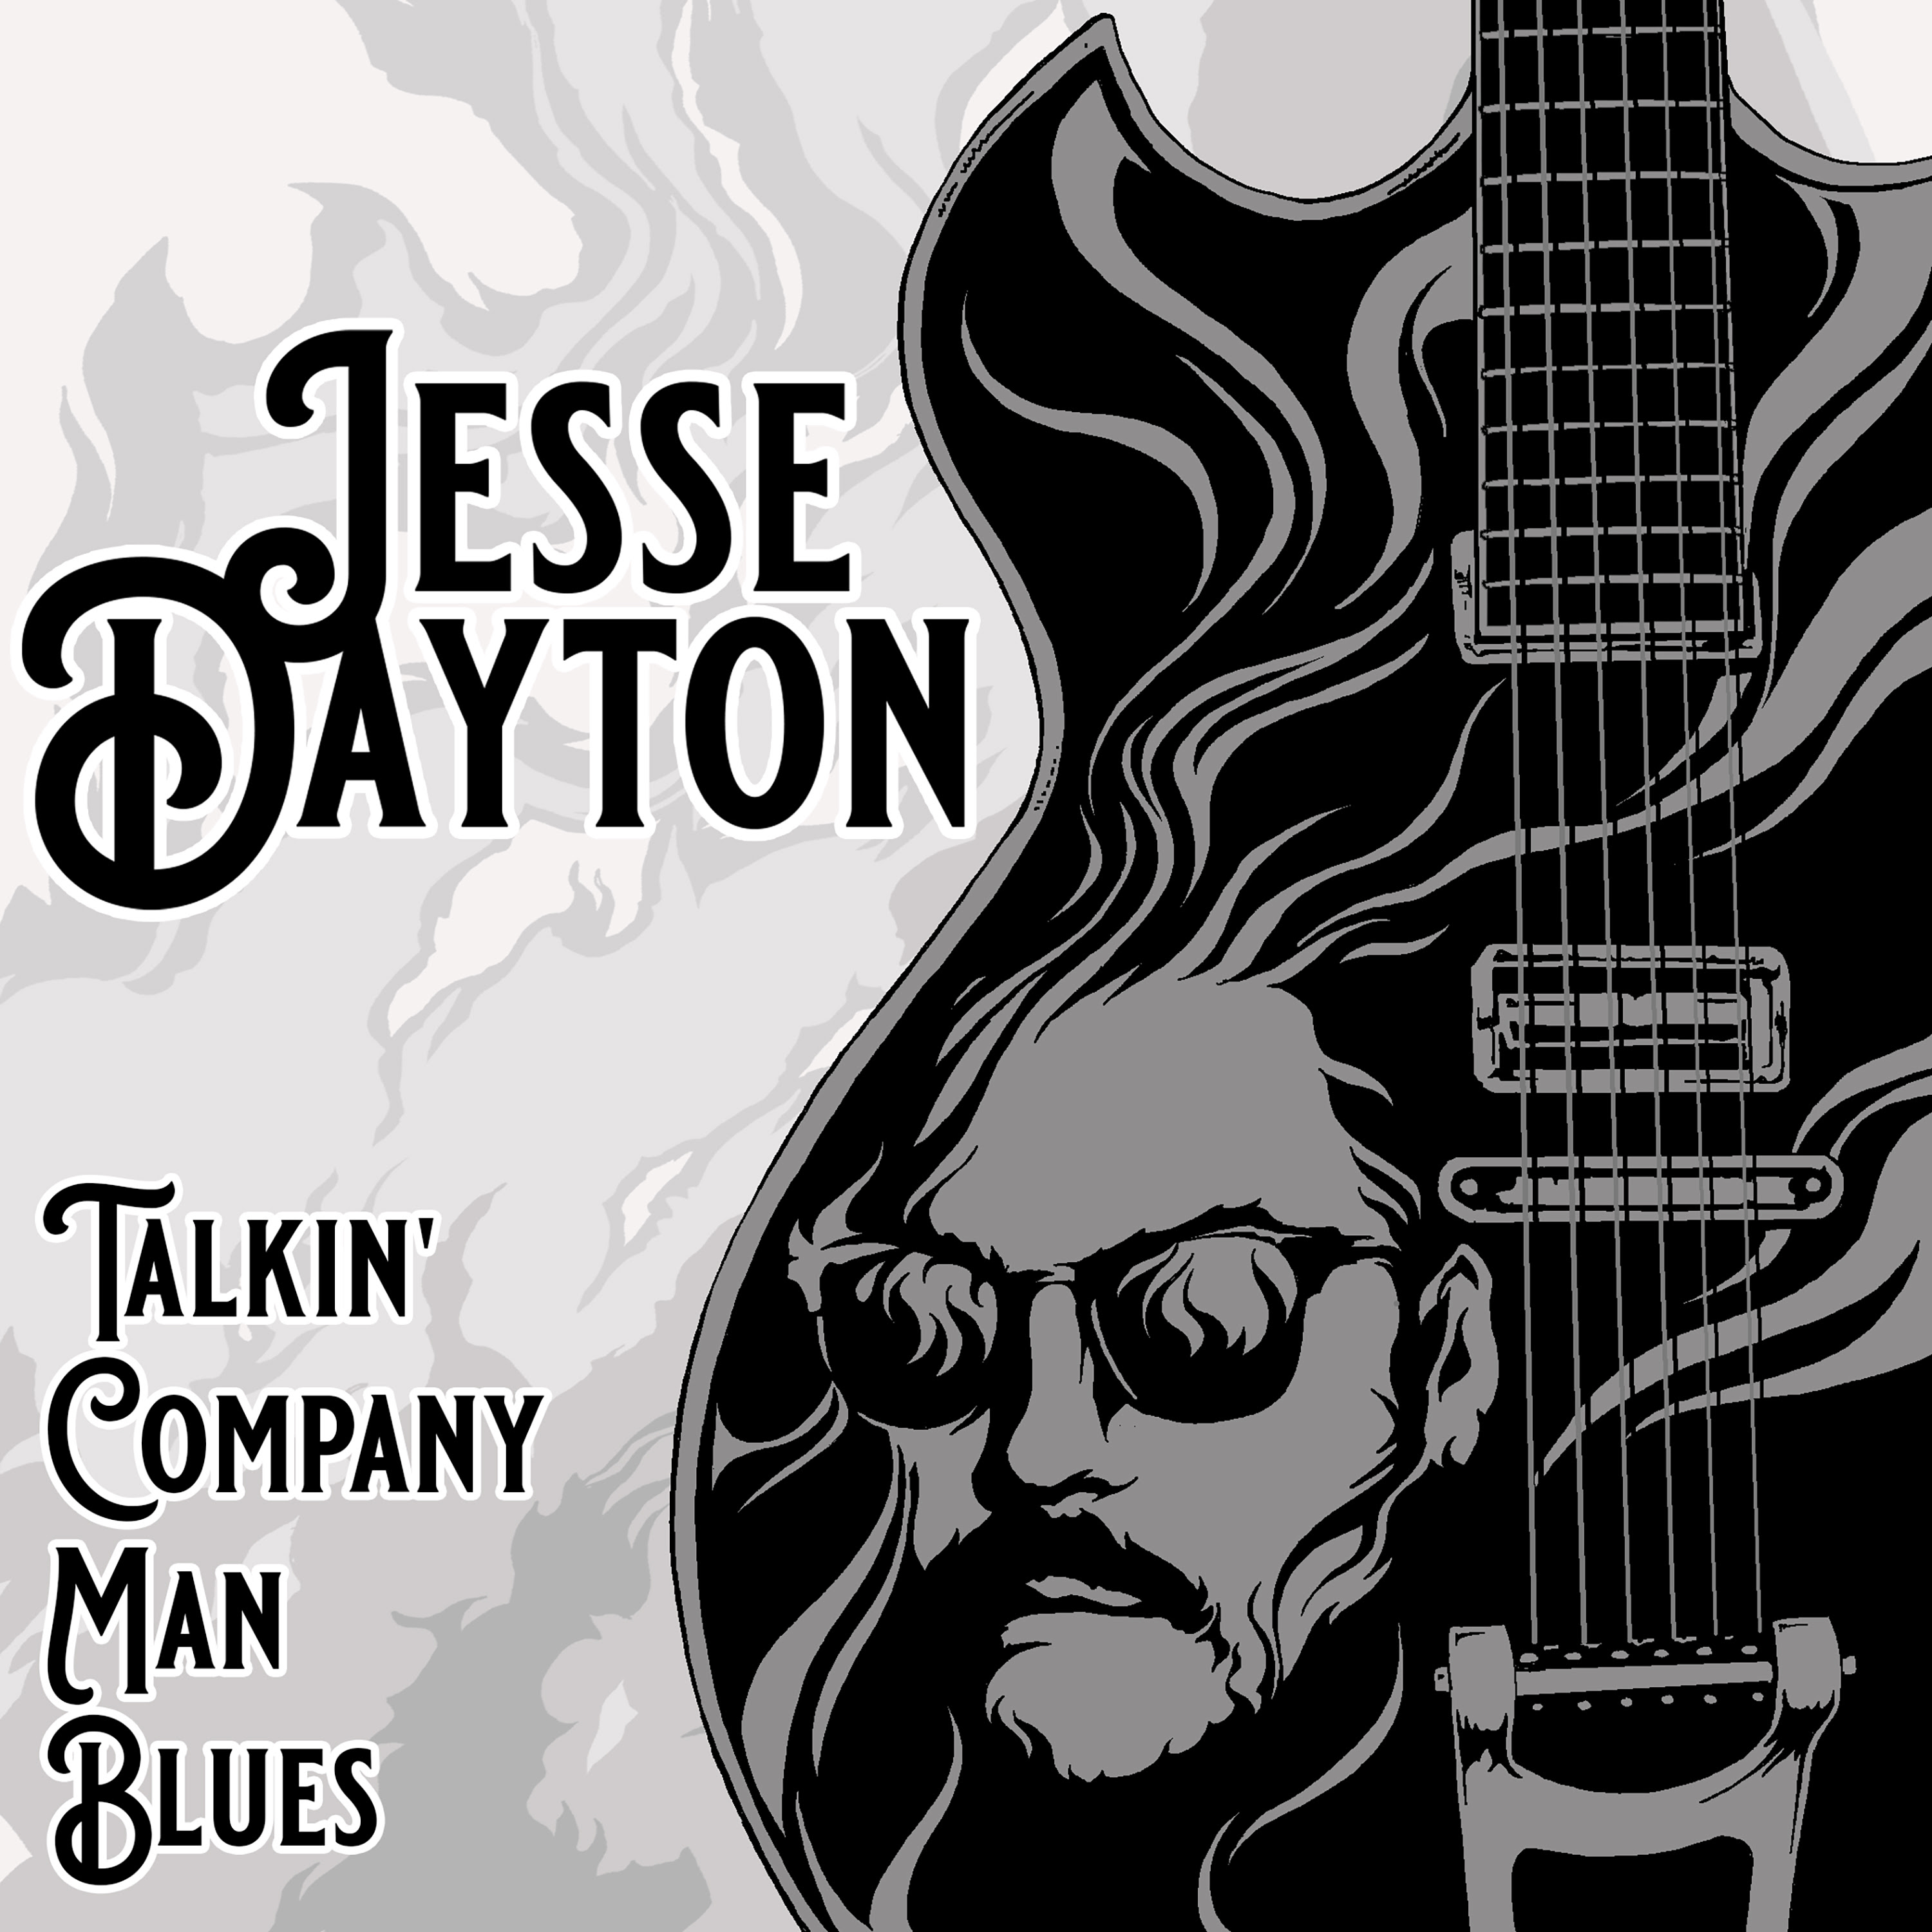 Celebrated Outlaw Rocker JESSE DAYTON Unveils New Single ~ “Talkin’ Company Man Blues” Listen Today